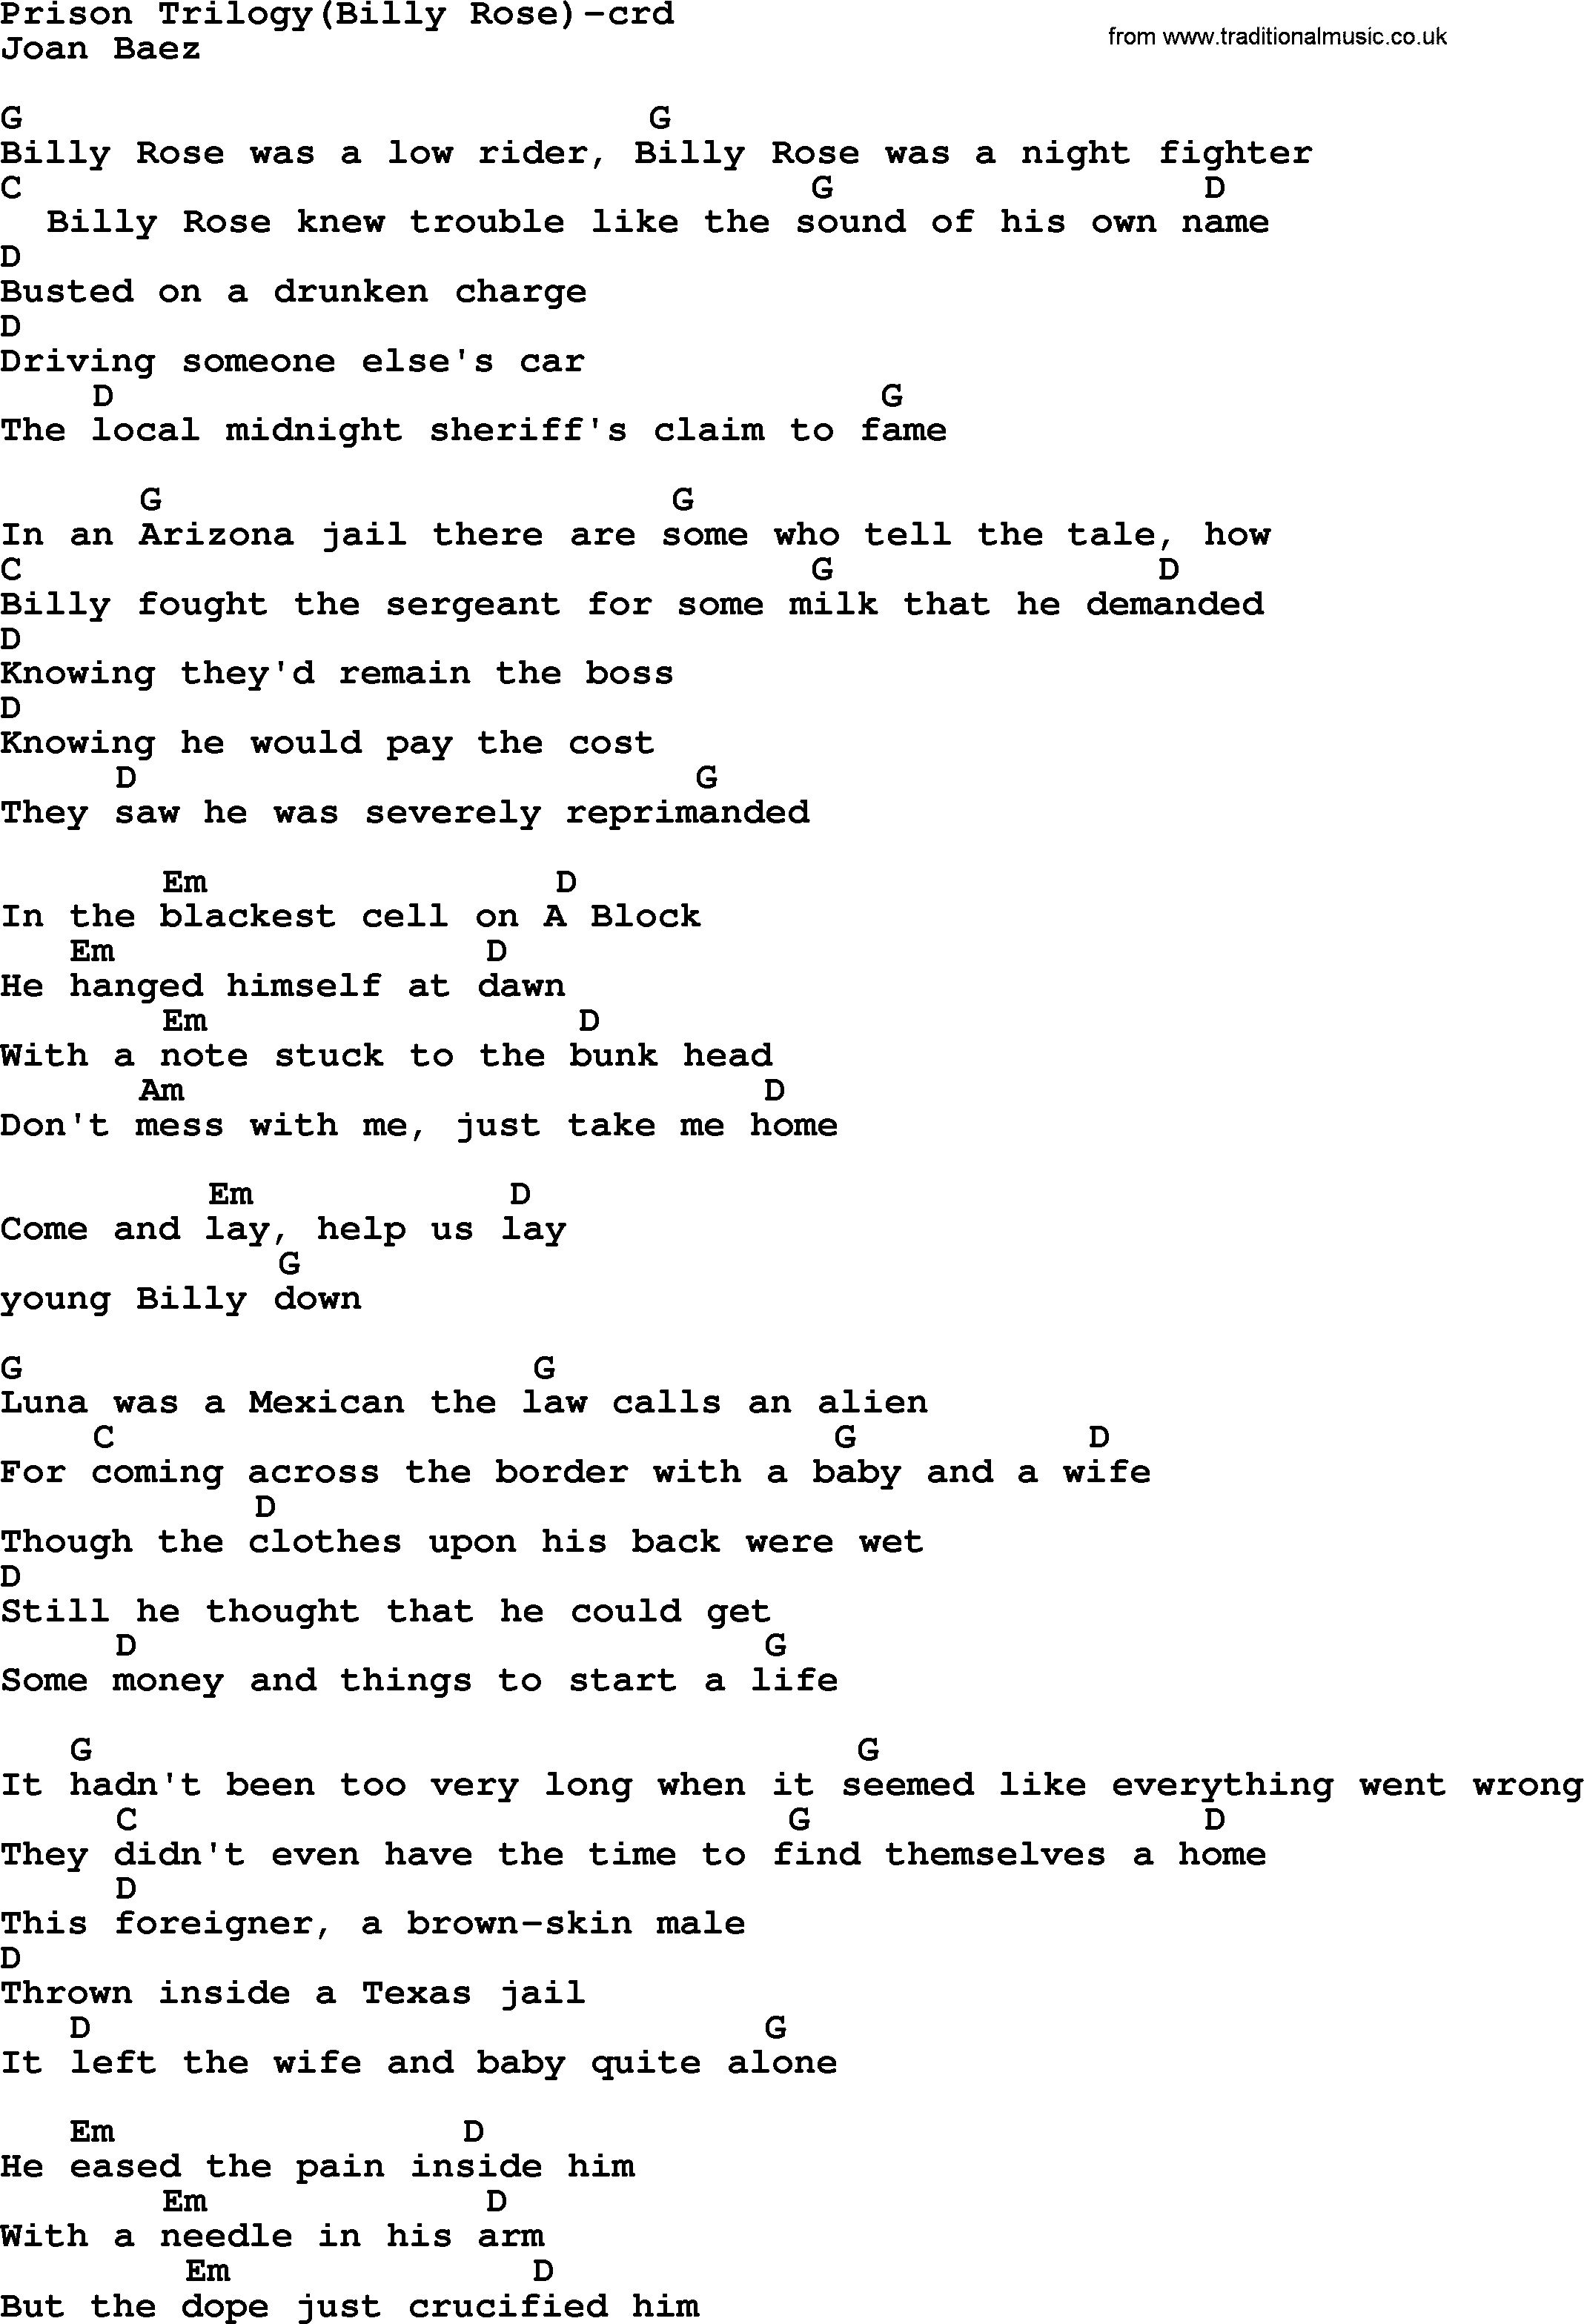 Joan Baez song Prison Trilogy Billy Rose lyrics and chords